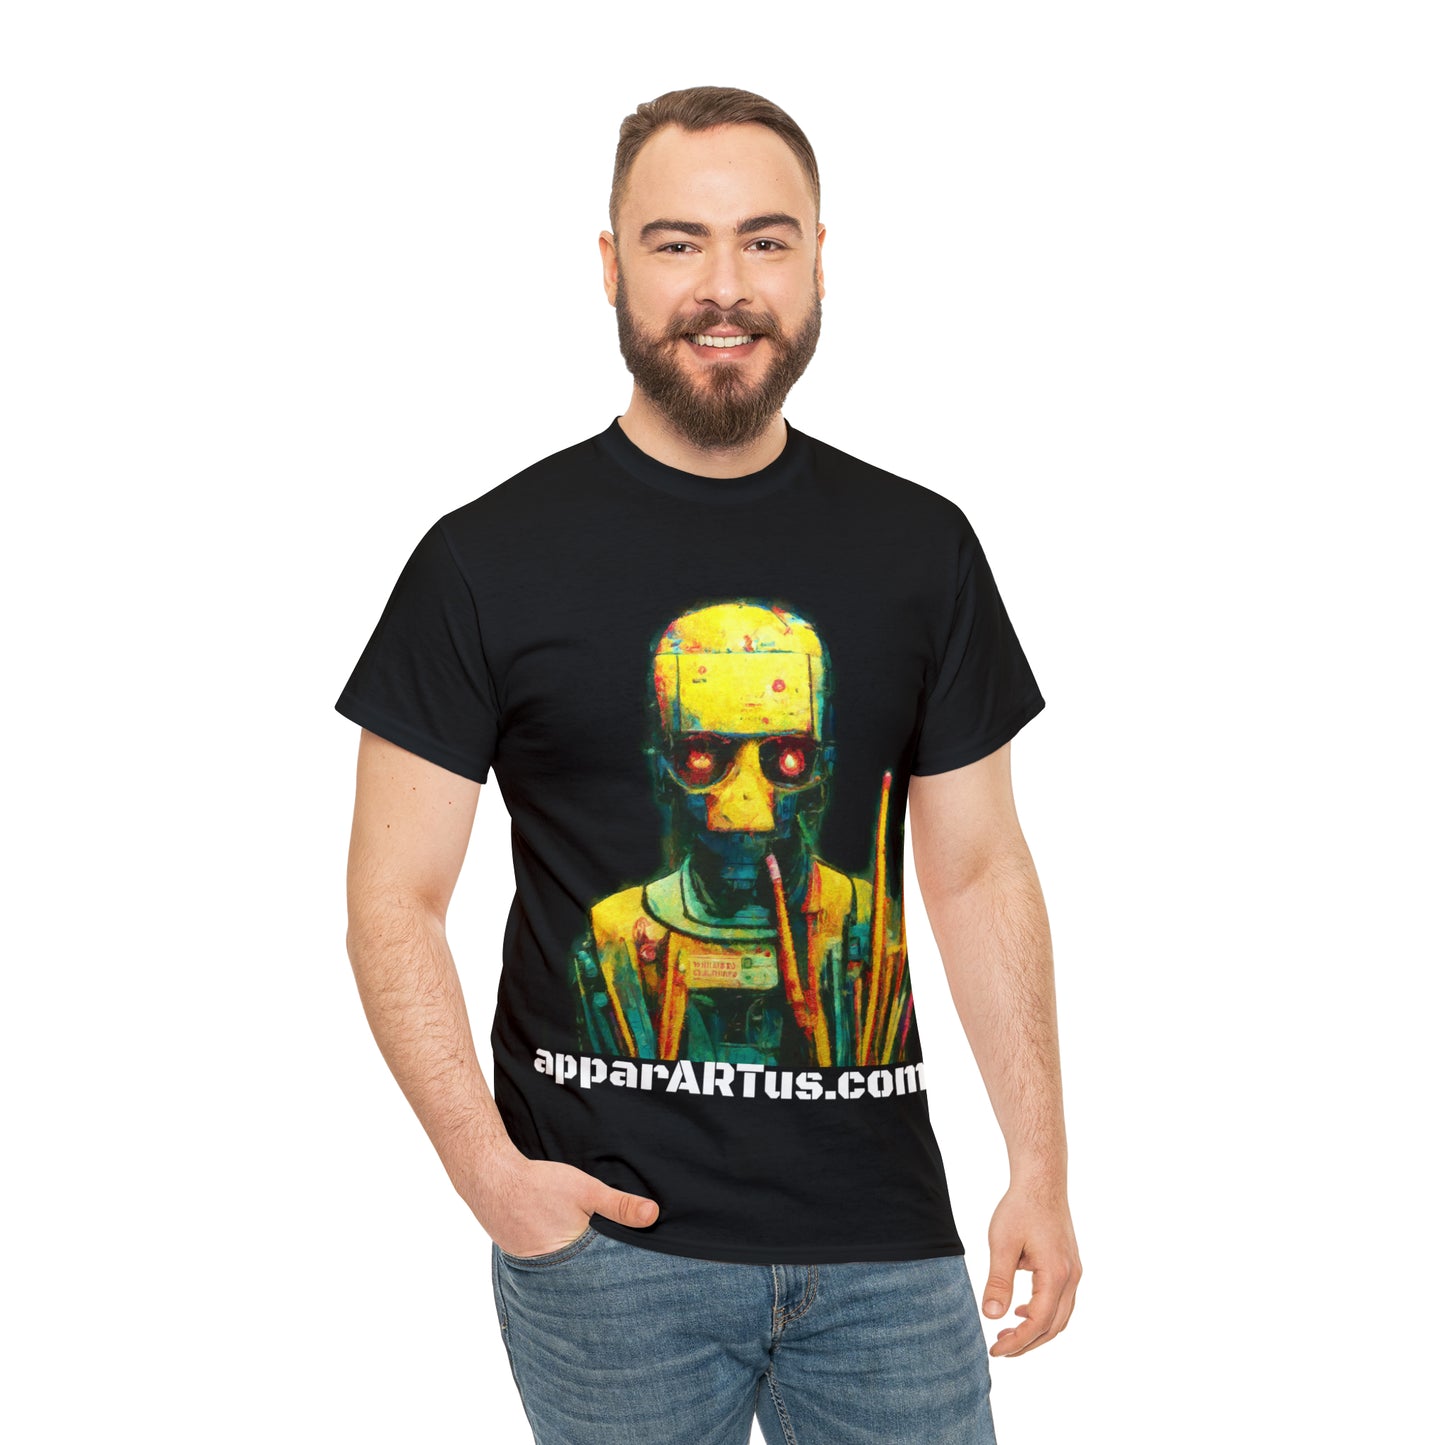 apparARTus.com Unisex Bot1 T-Shirt - shipped from Australia